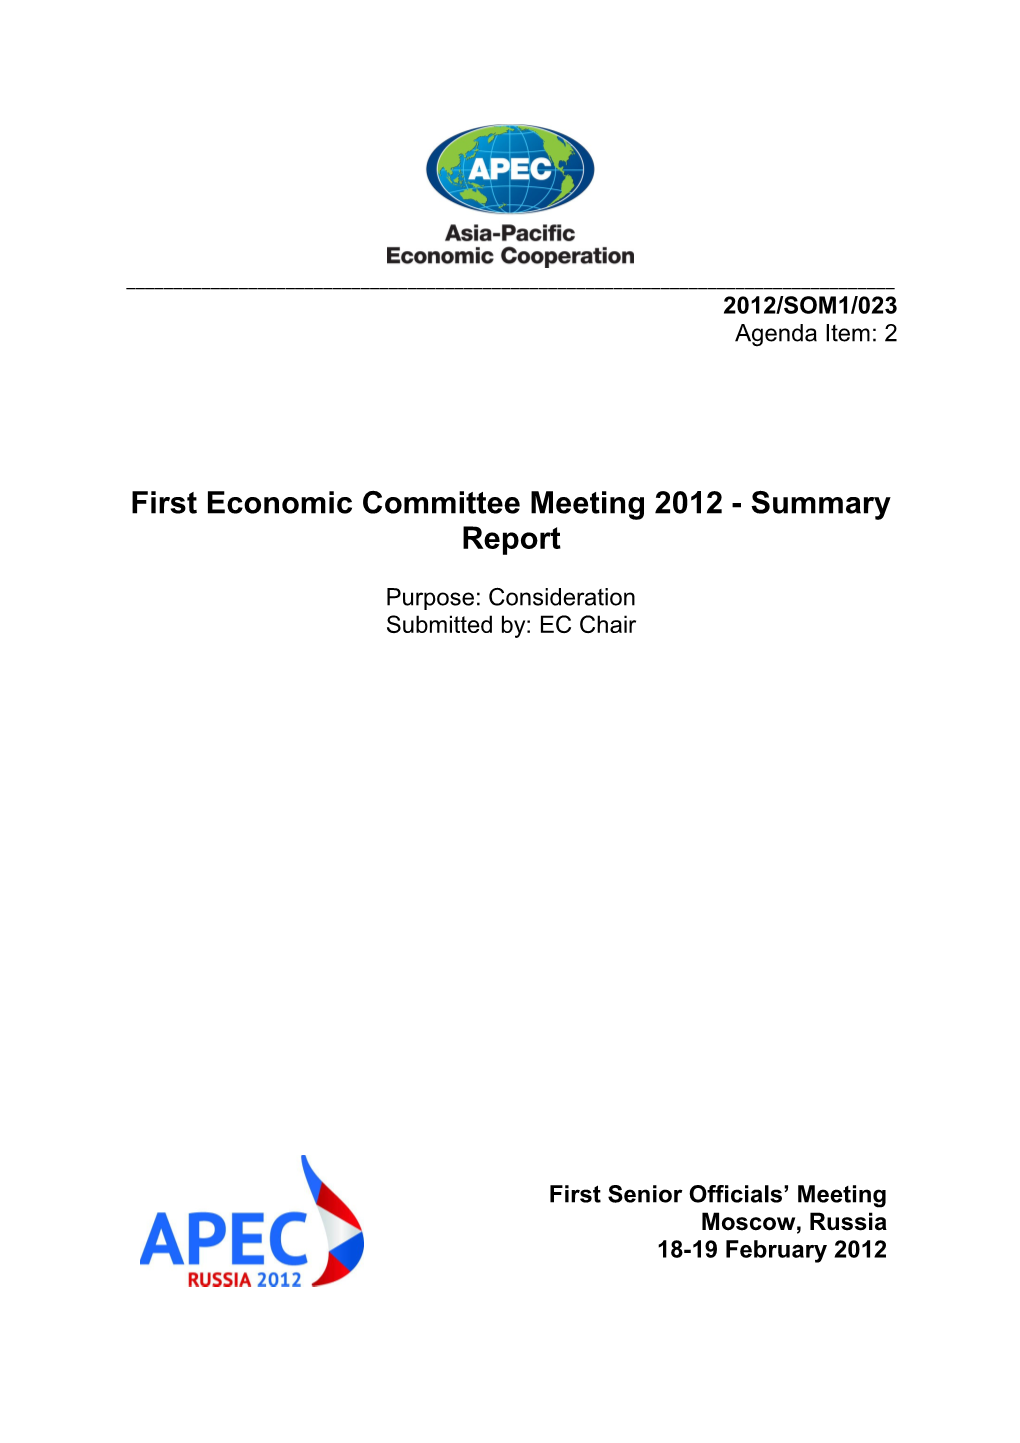 APEC Economic Committee First Plenary Meeting